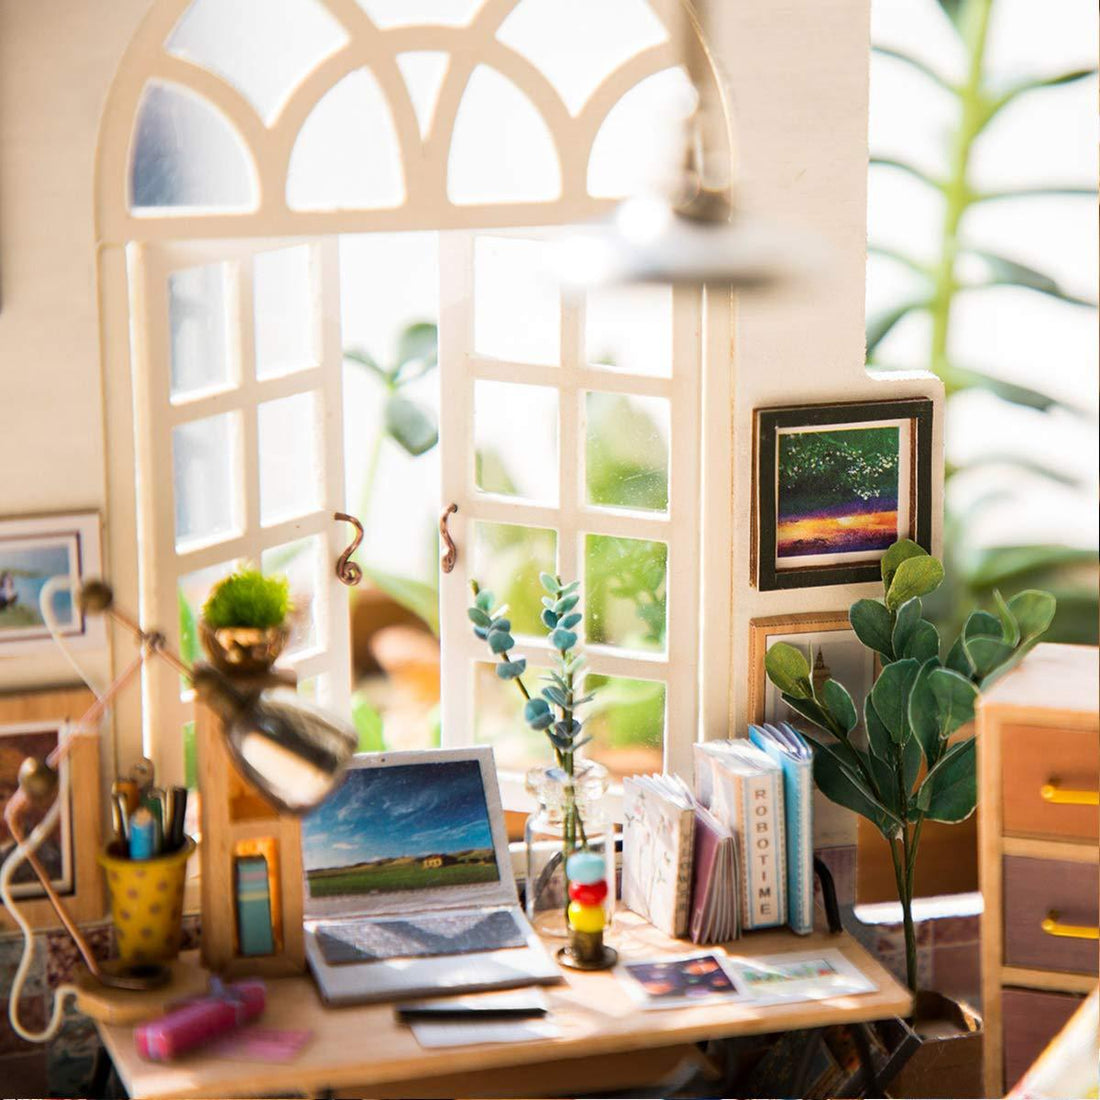 Home Office 3D Wooden Dollhouse - Kitty Hawk Kites Online Store